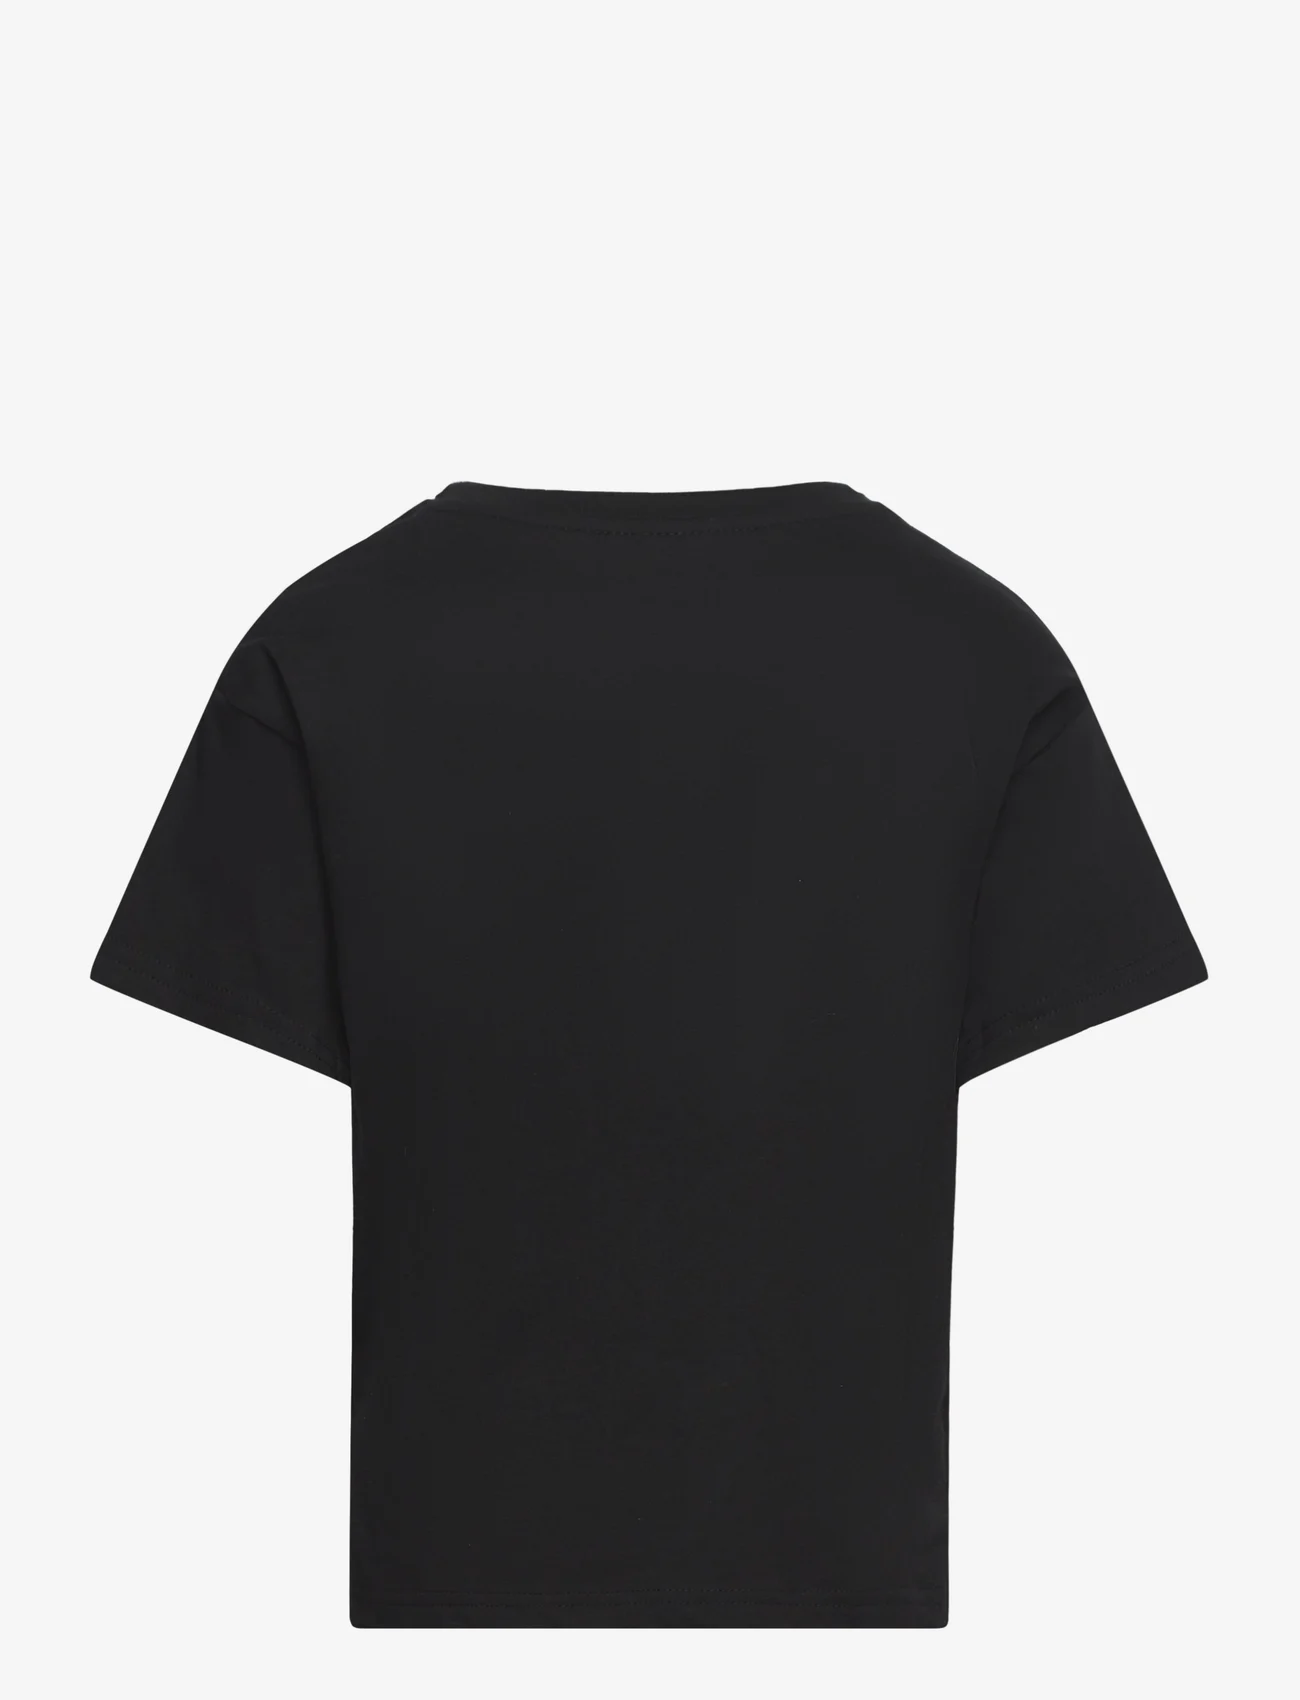 Nike - B NSW RELAXED POCKET TEE - kortærmede t-shirts - black - 1